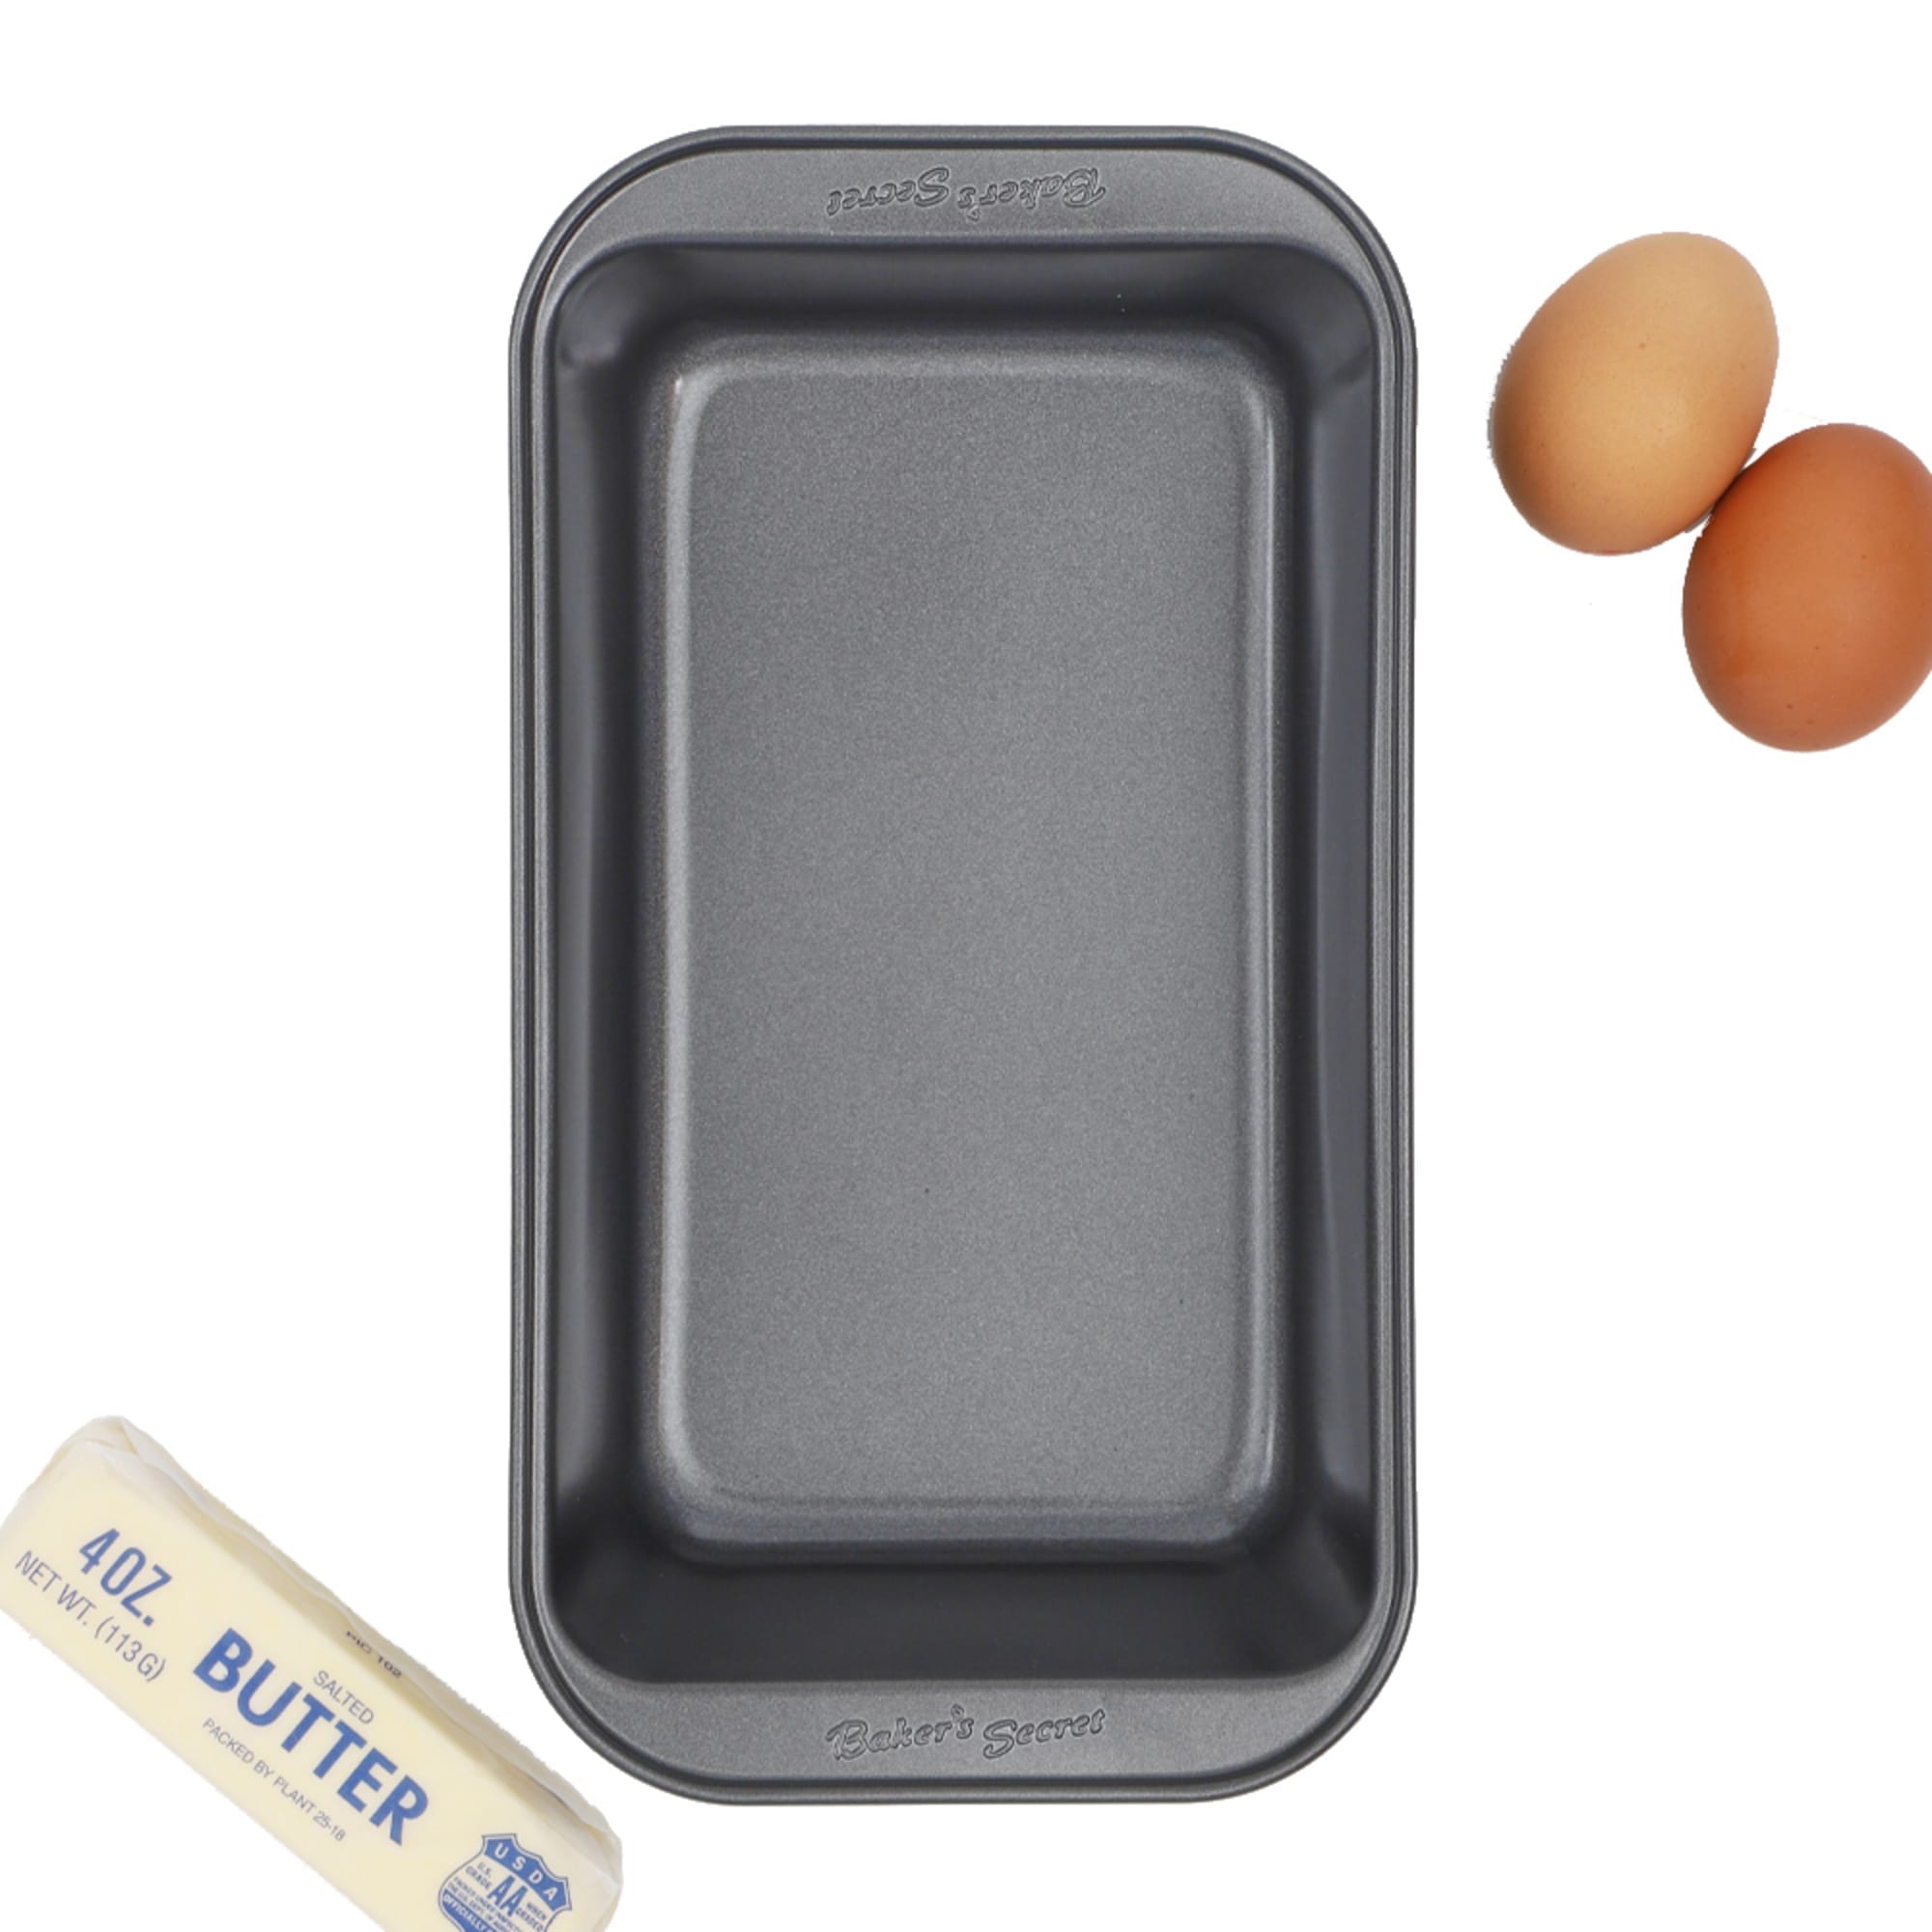 Baker’s Secret Essentials 11-inch Non-Stick Steel Loaf Pan $5.00 EACH, CASE PACK OF 12